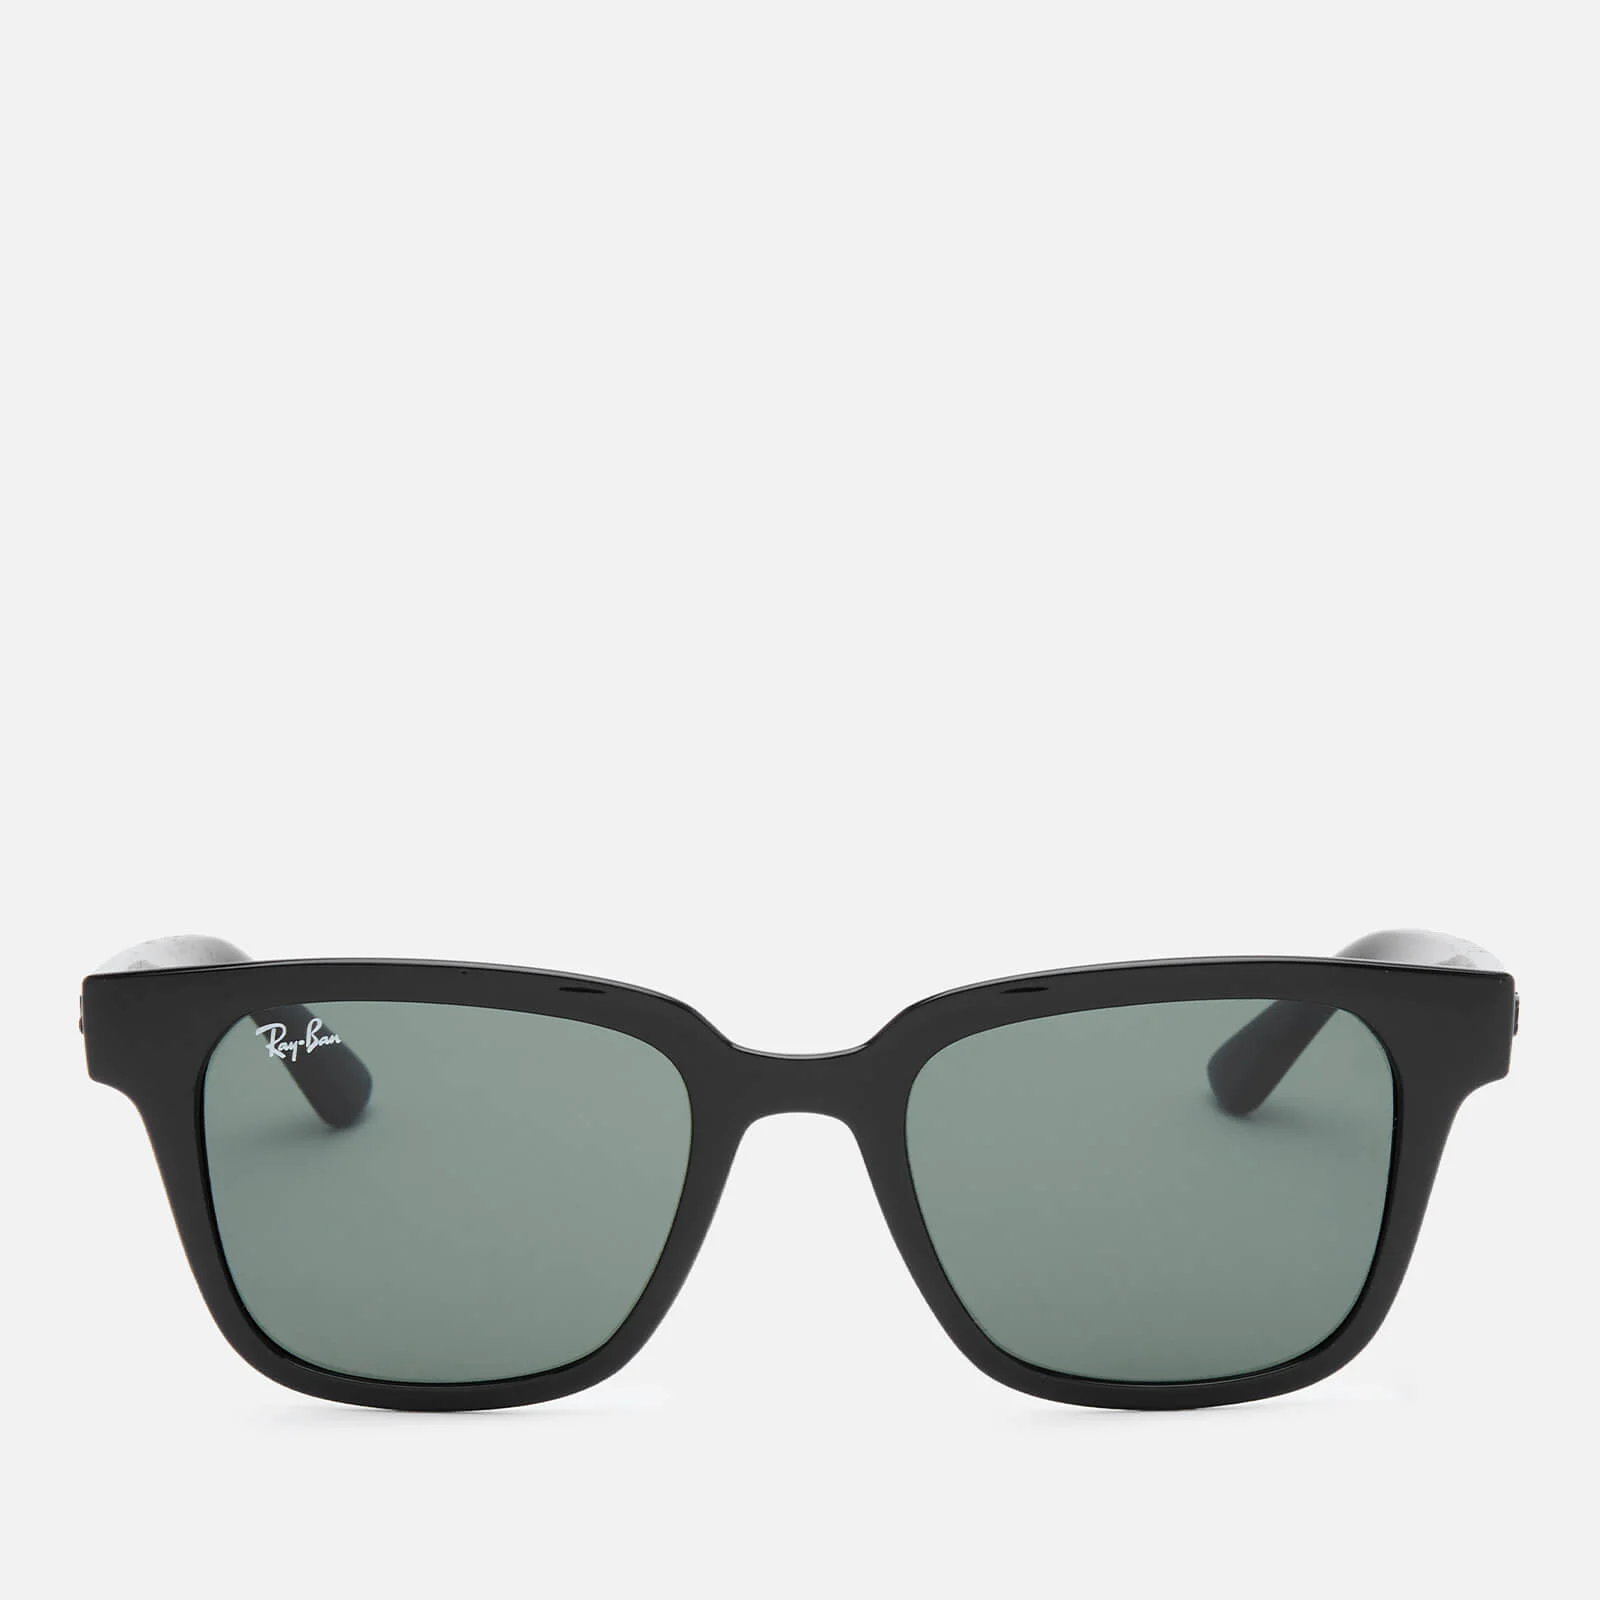 Ray-Ban Women's Classic Square Frame Sunglasses - Black Image 1